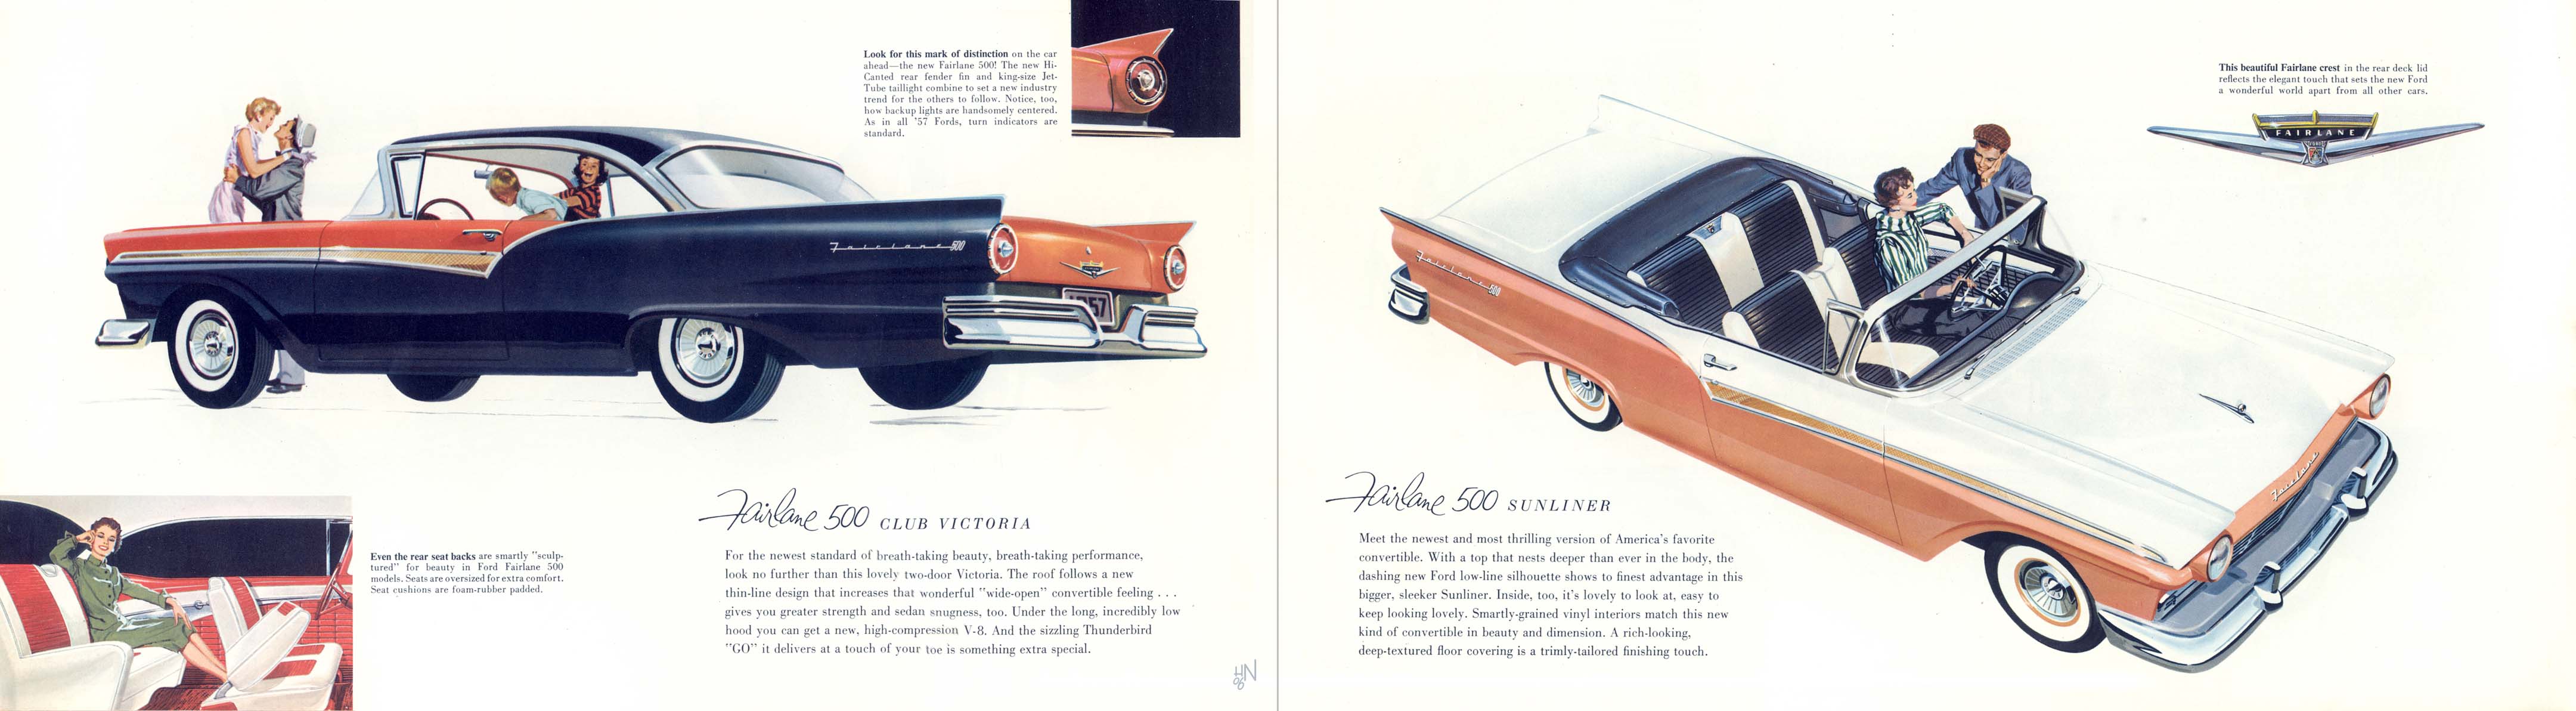 1957 Ford Fairlane-06-07